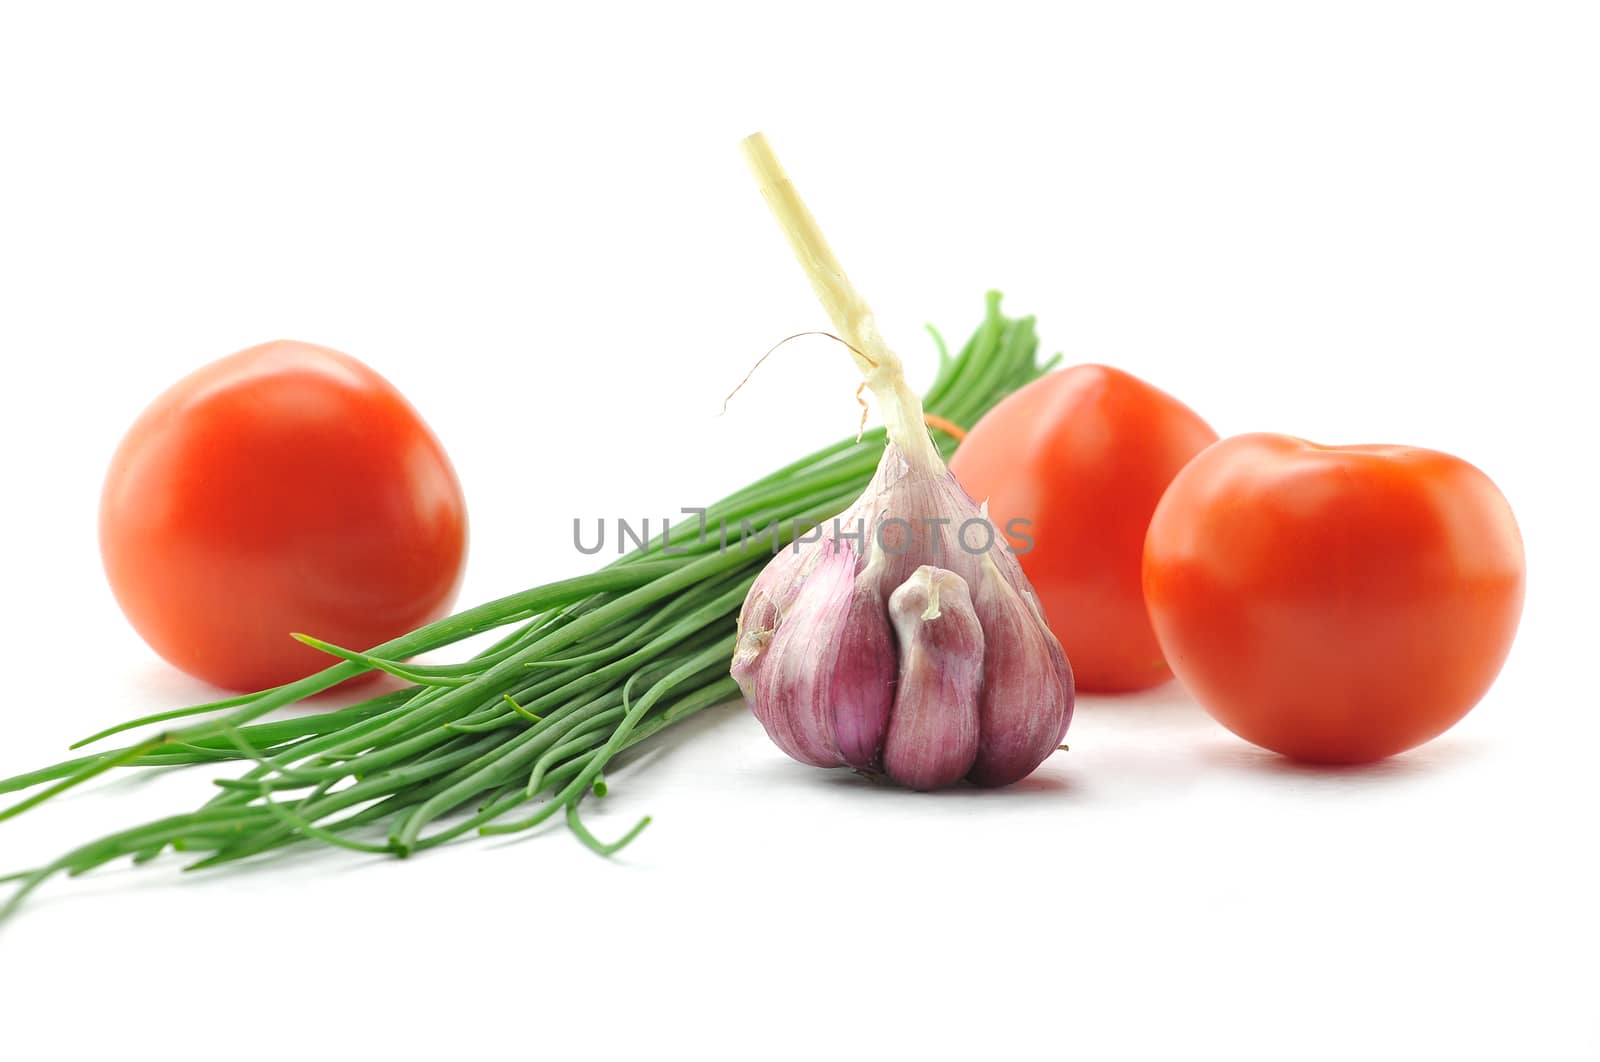 Mediterranean food ingredients: spring onions, garlic and tomatoes